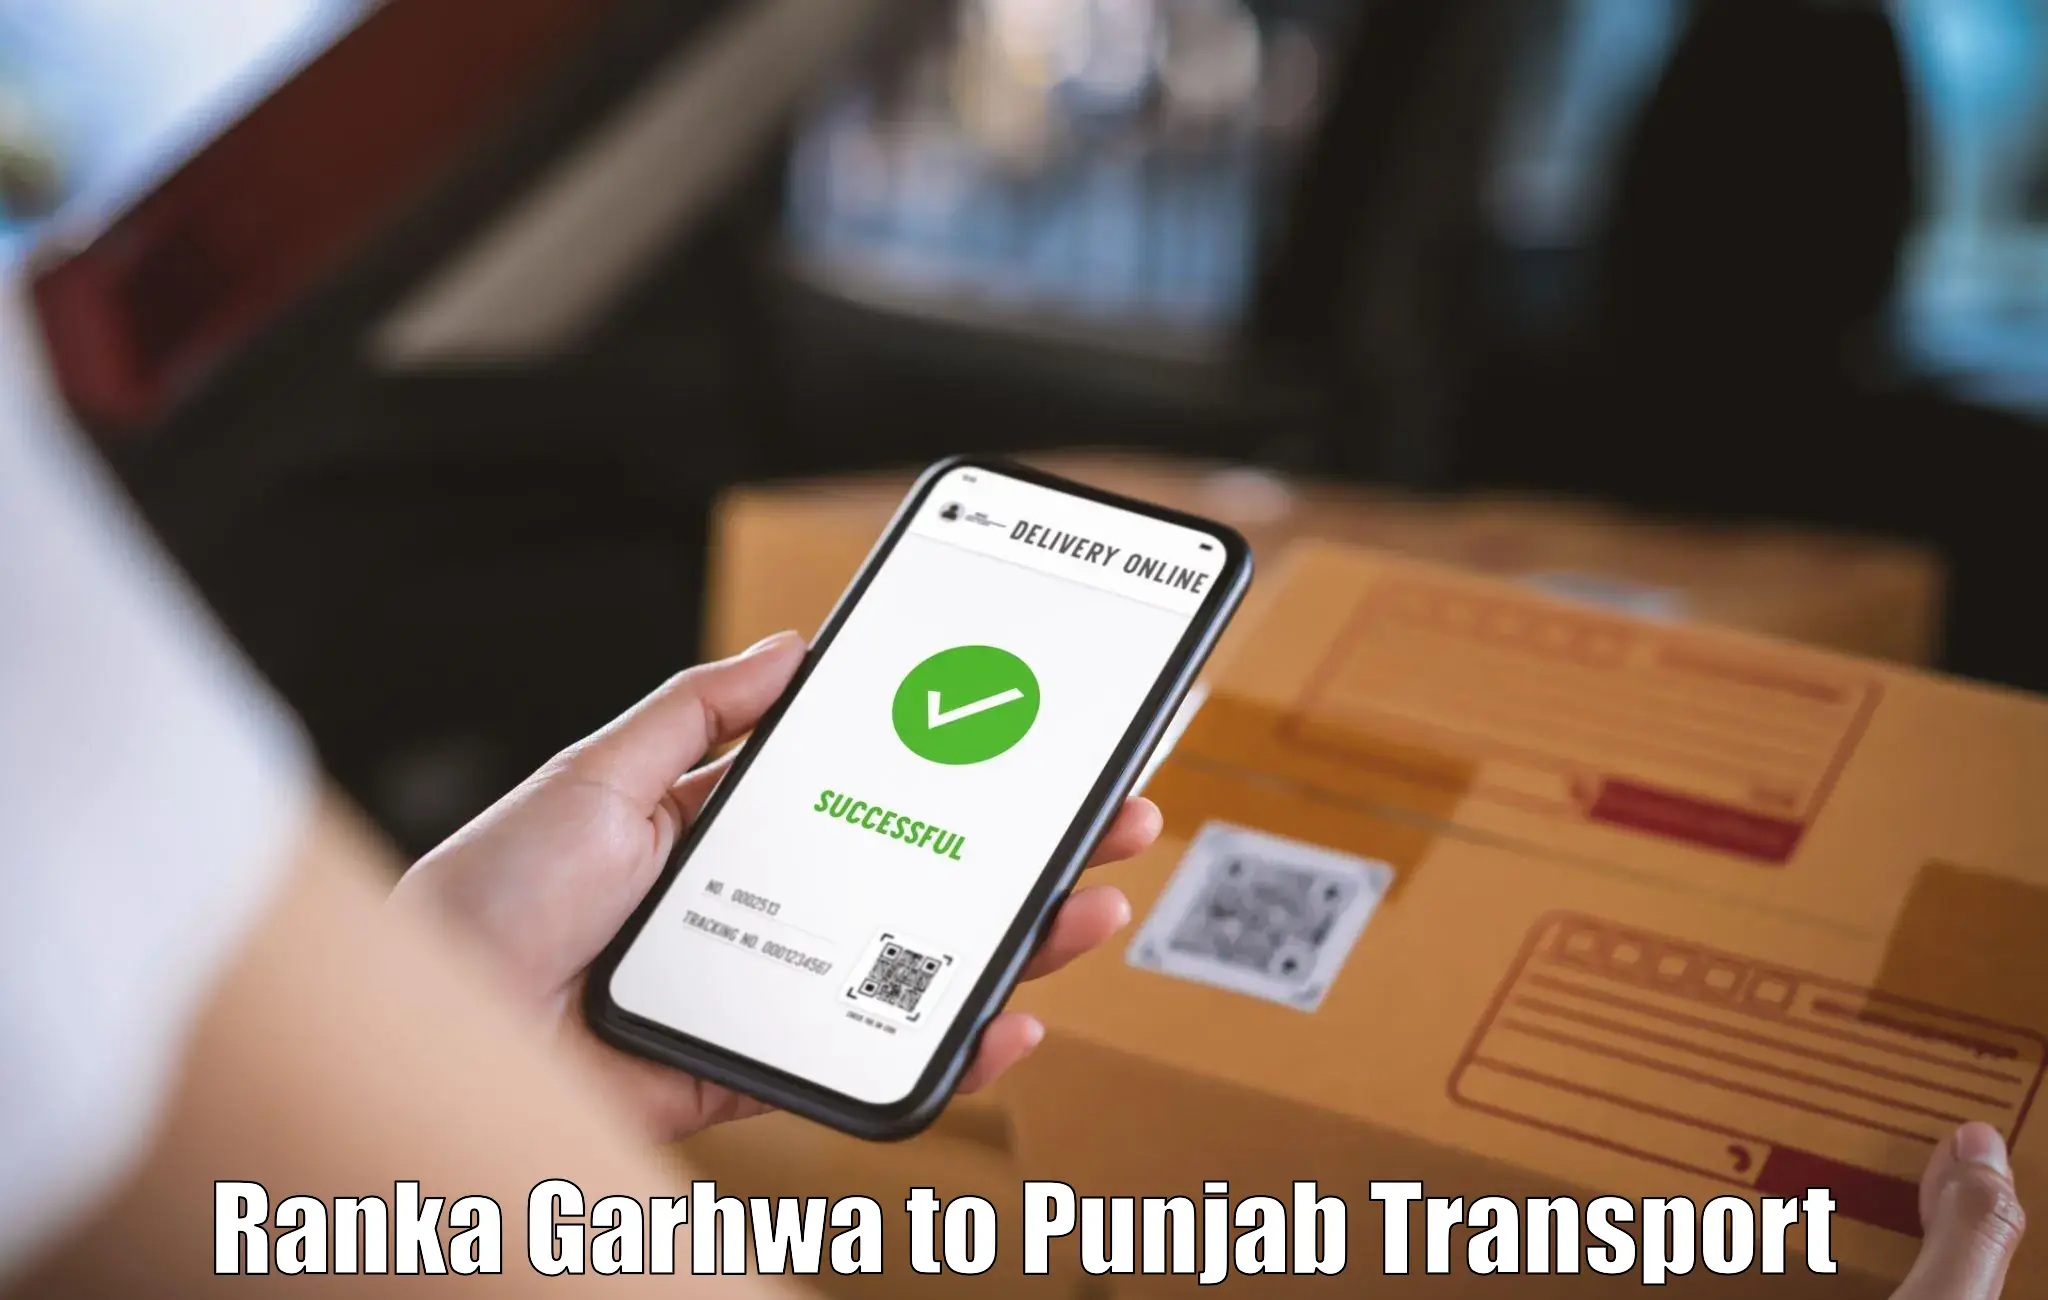 Transport services Ranka Garhwa to Fazilka